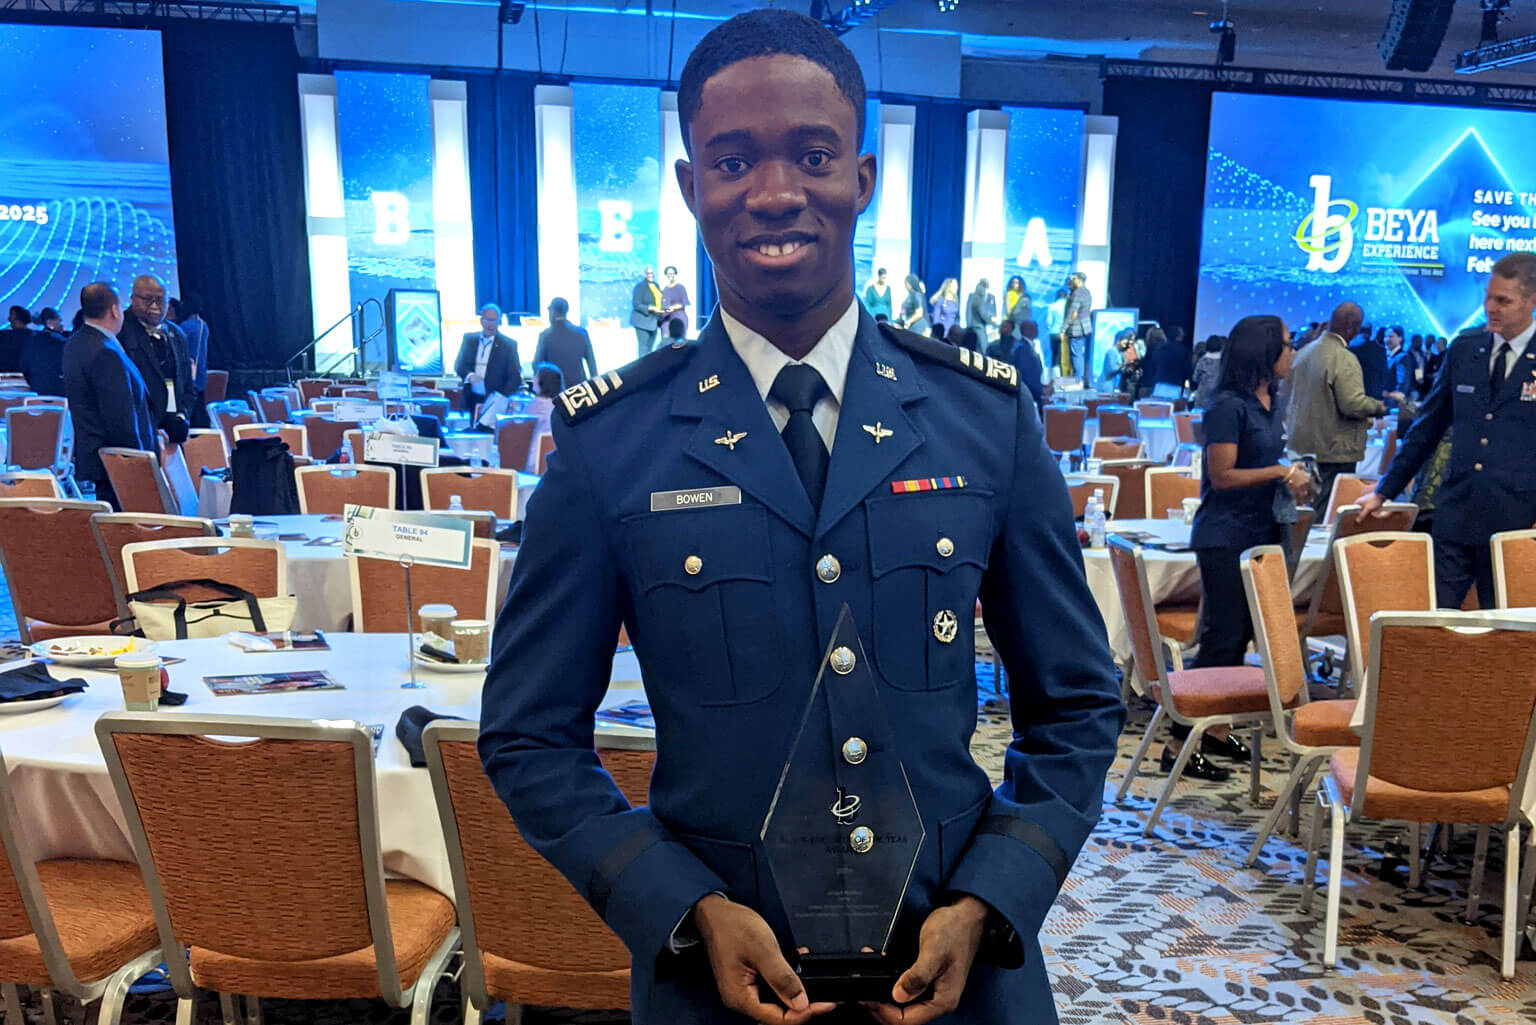 Cadet 1st Class Jabari Bowen poses with his award at the Black Engineer of the Year Award ceremony.